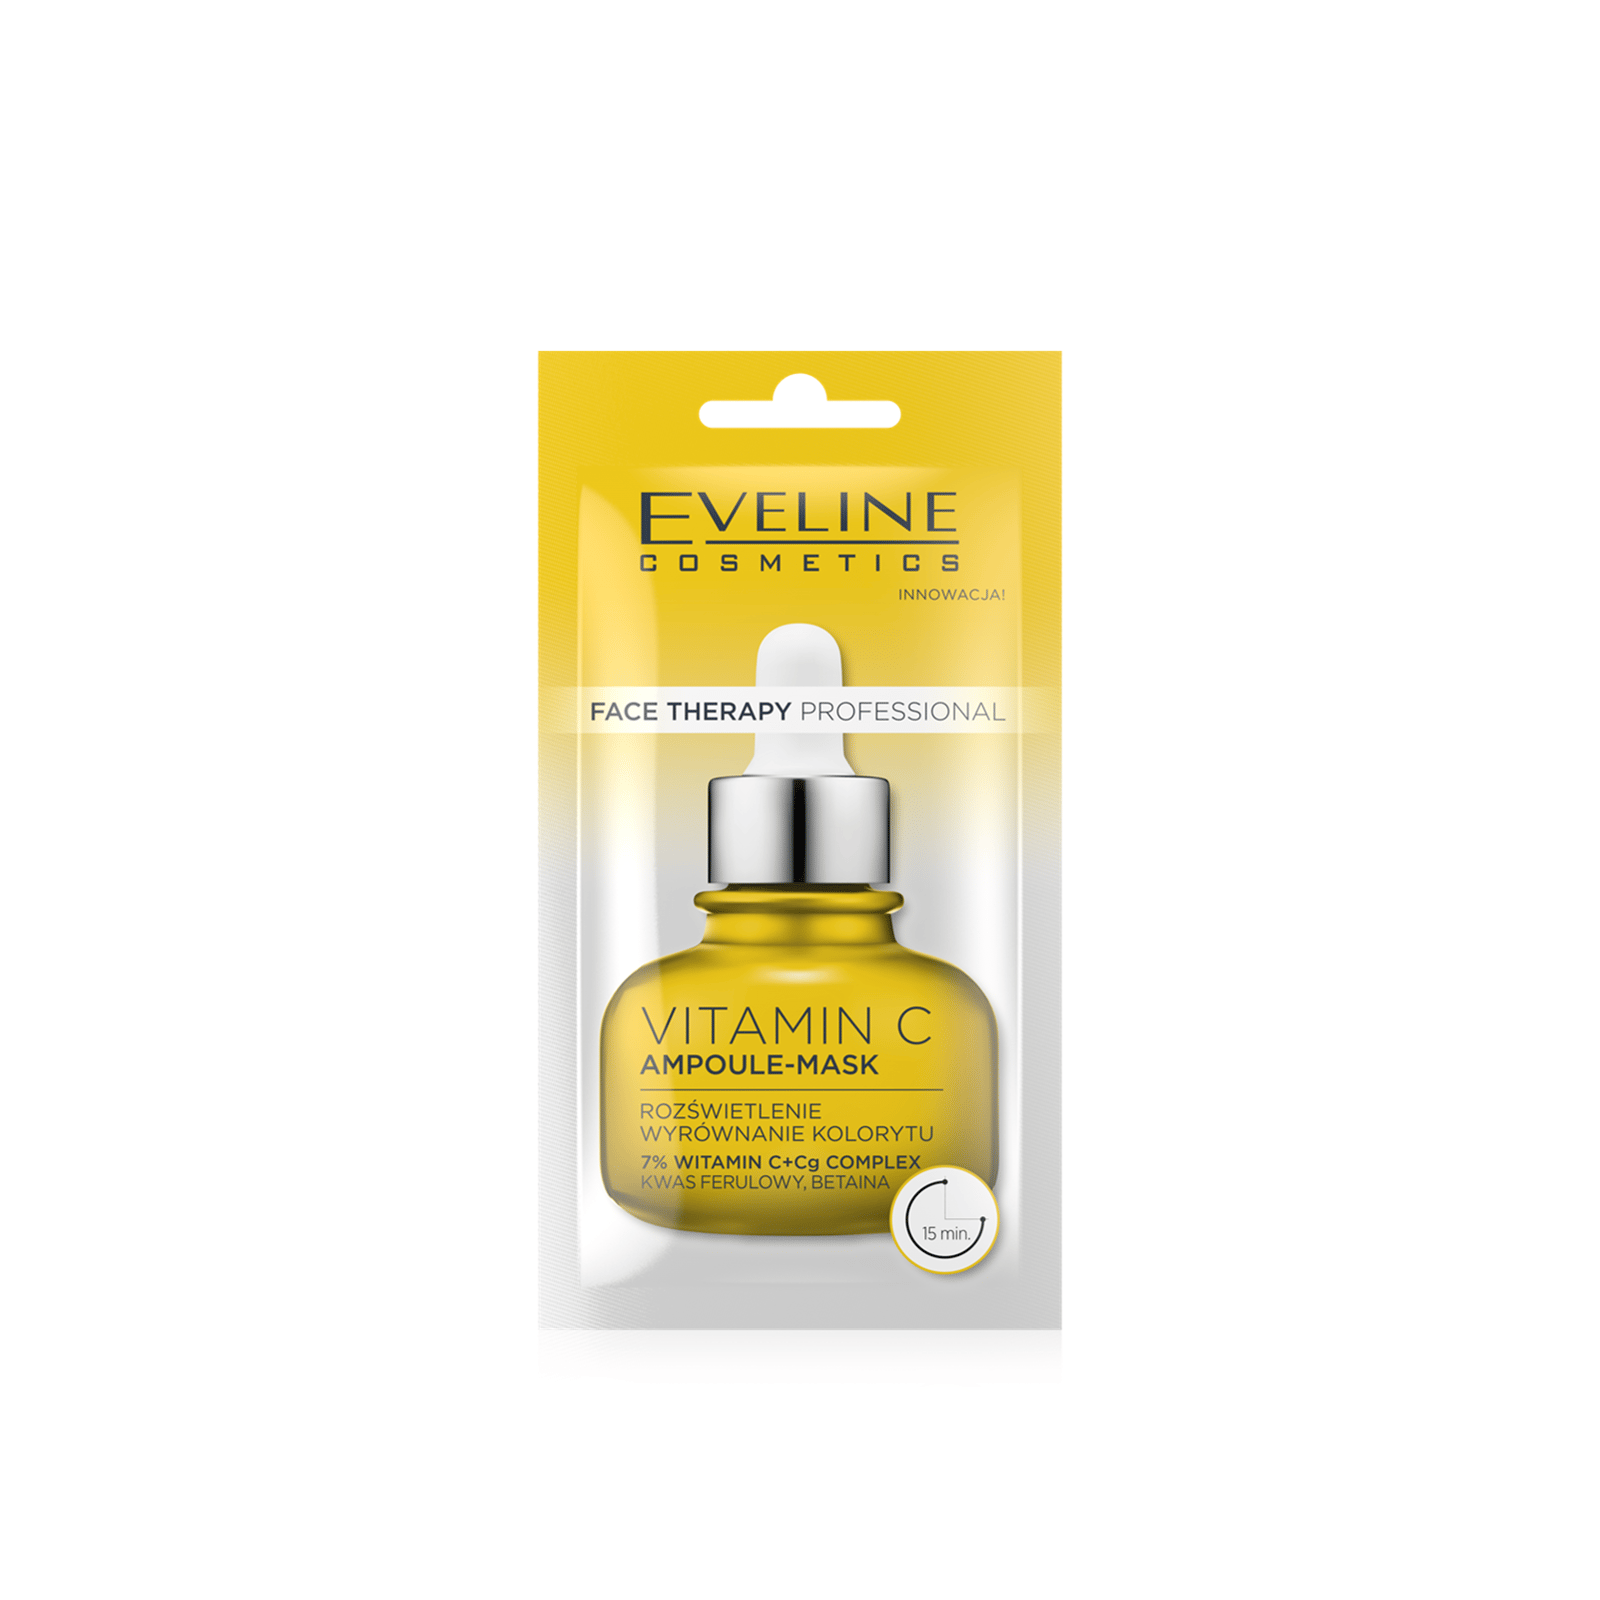 Eveline Cosmetics Face Therapy Vitamin C Ampoule-Mask 8ml